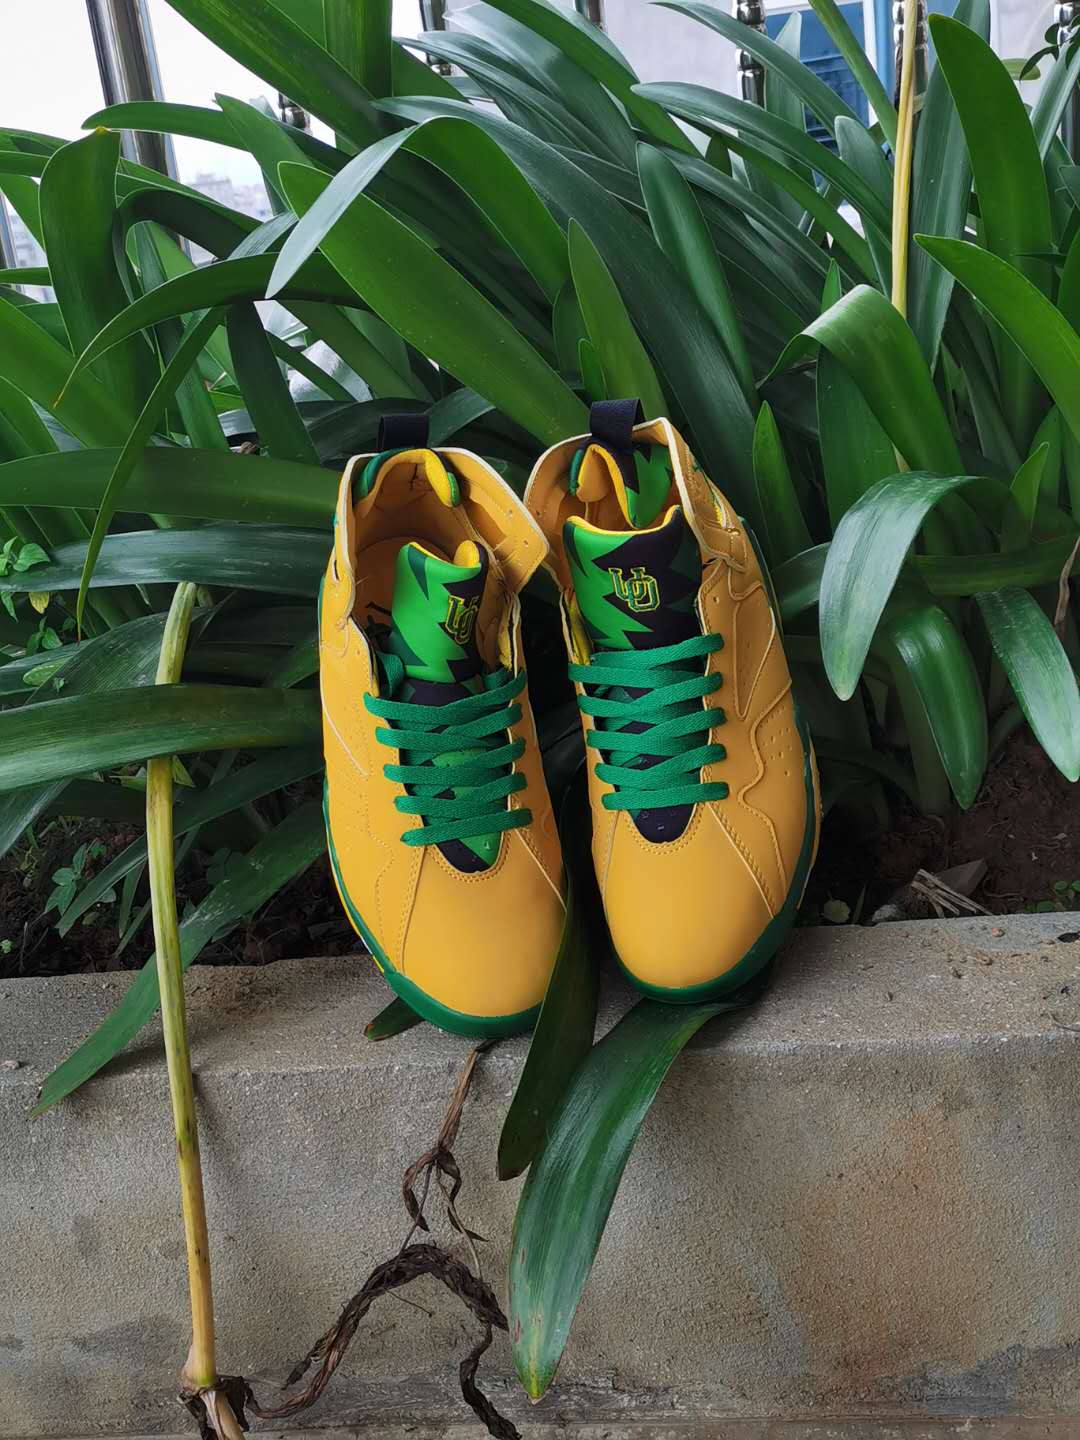 New Air Jordan 7 Retro Ginger Yellow Green Shoes